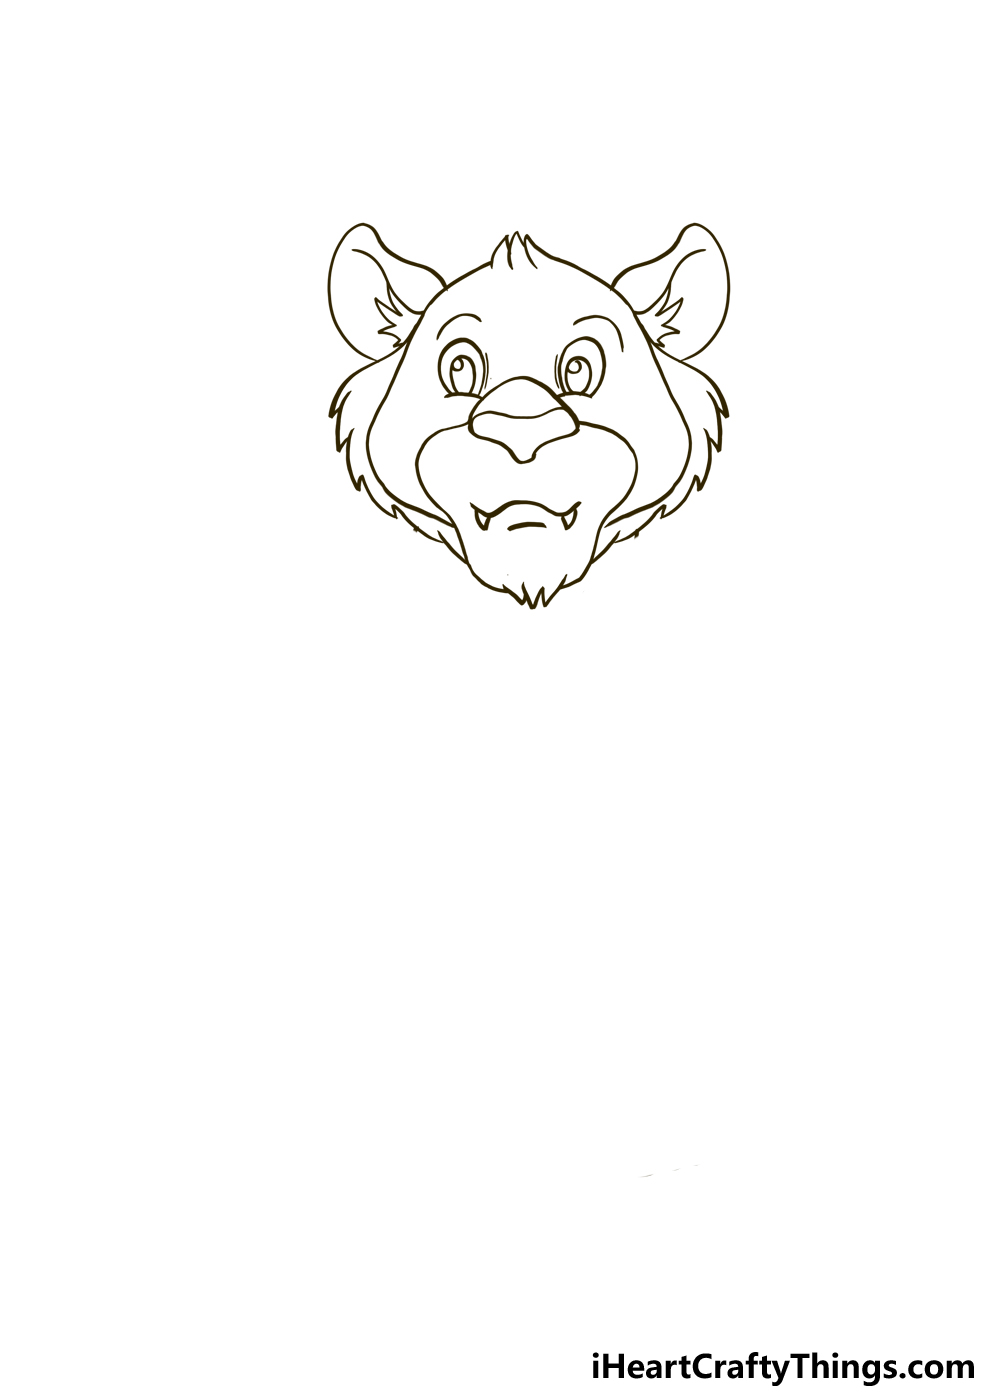 How to Draw A Cartoon Tiger step 3